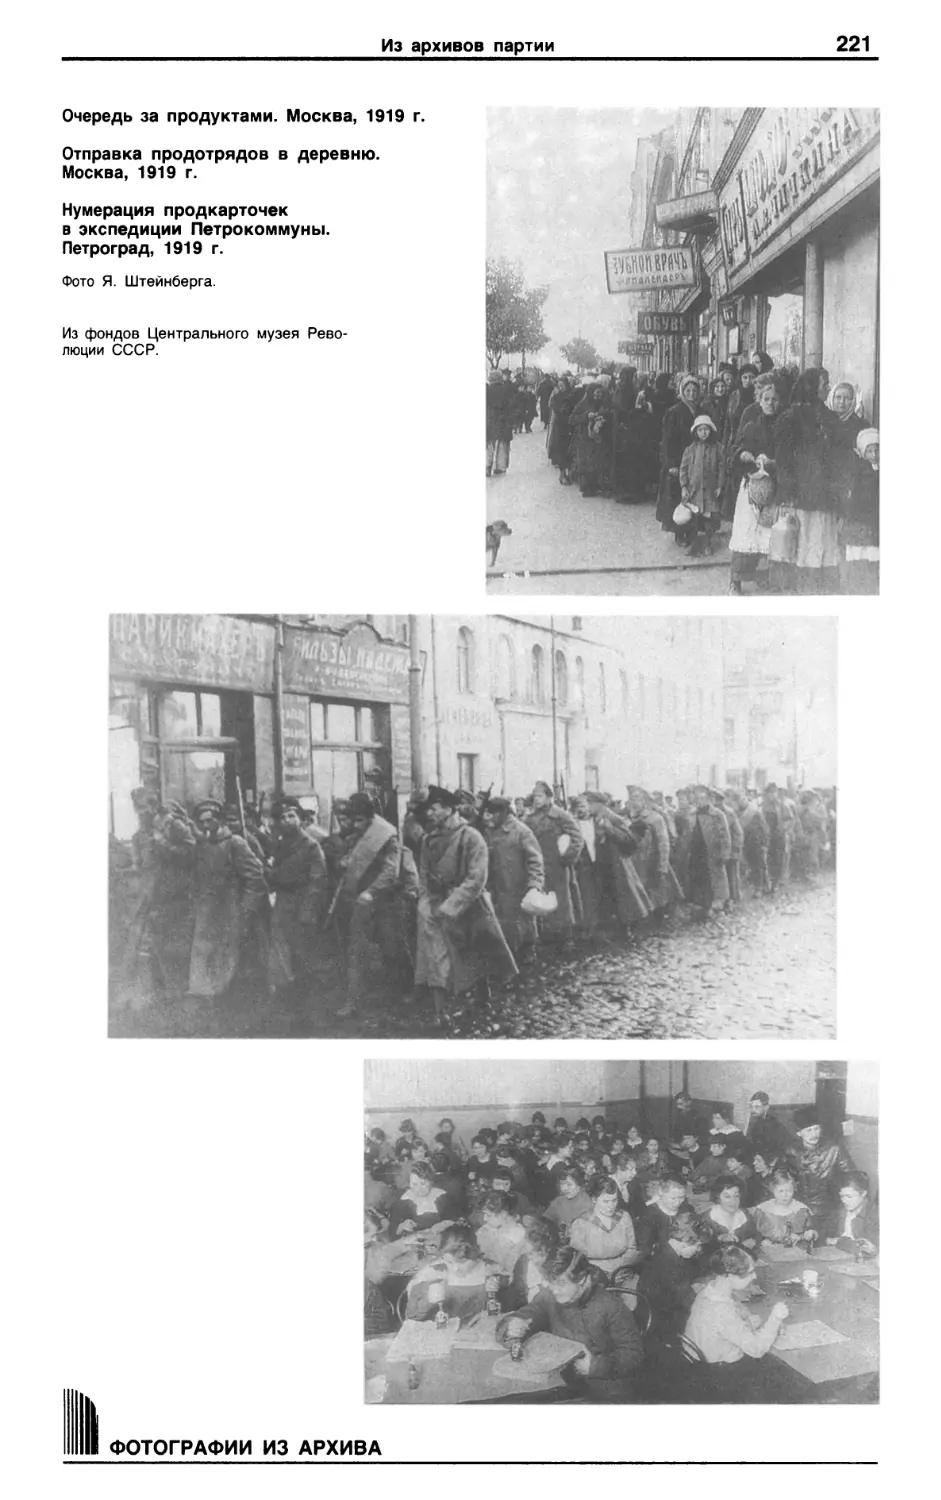 1919 г. Борьба с голодом